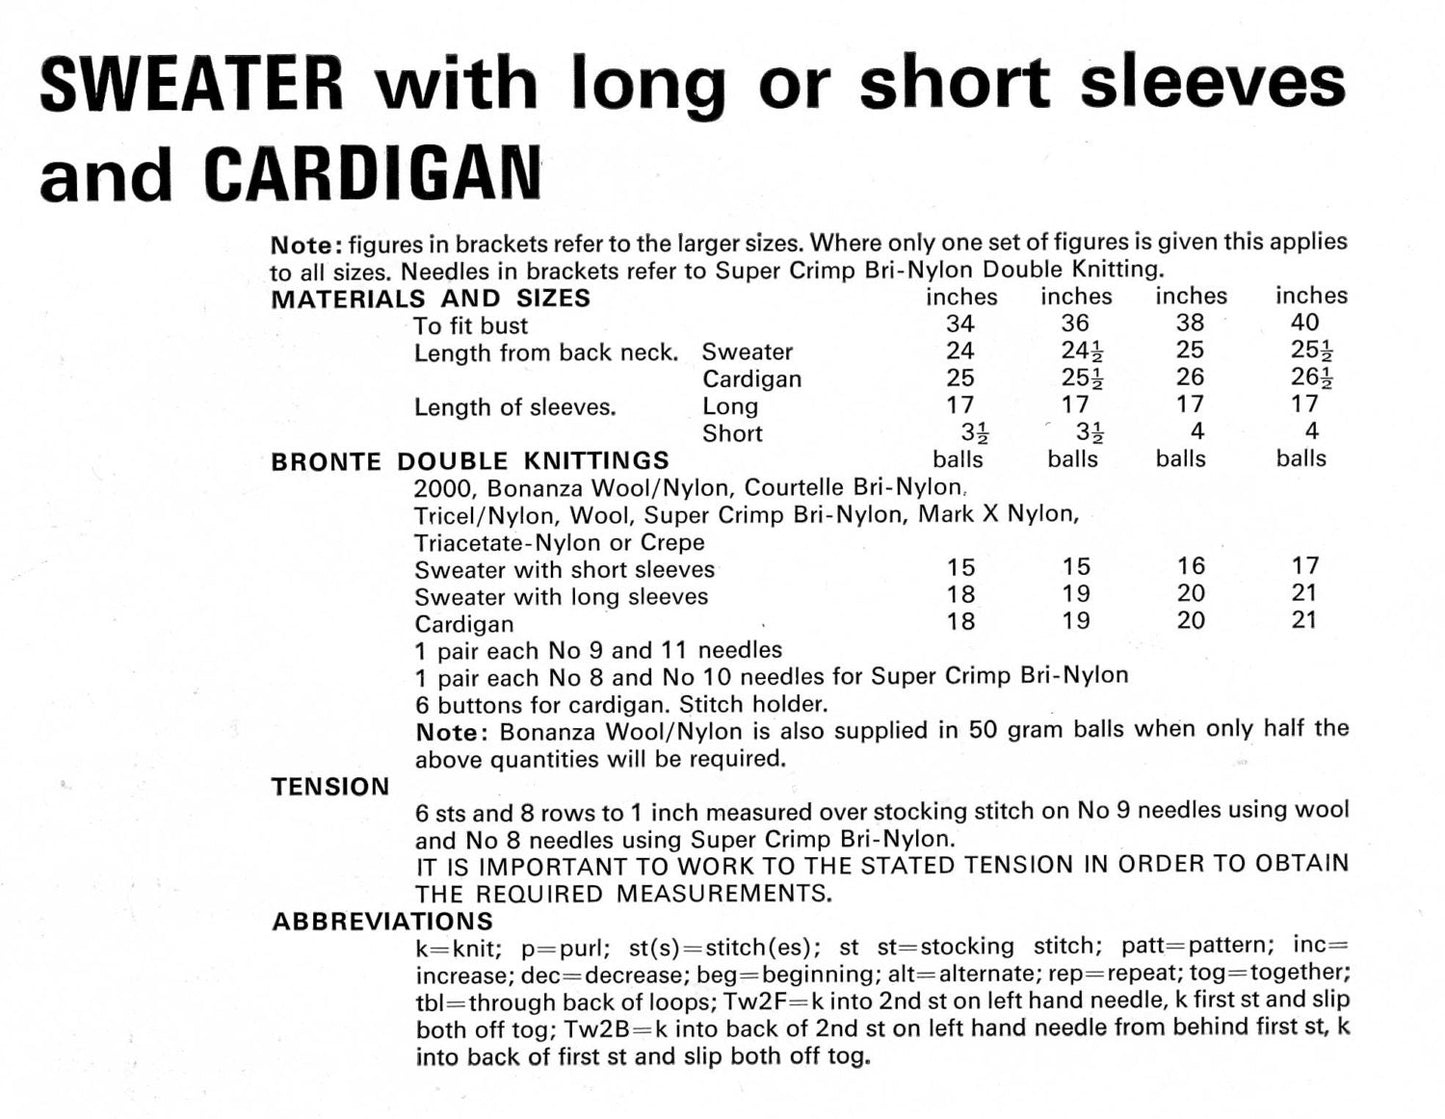 Ladies Sweater / Jumper and Cardigan, Short or Long Sleeves, 34"-40" Bust, DK, 70s Knitting Pattern, Bronte 749